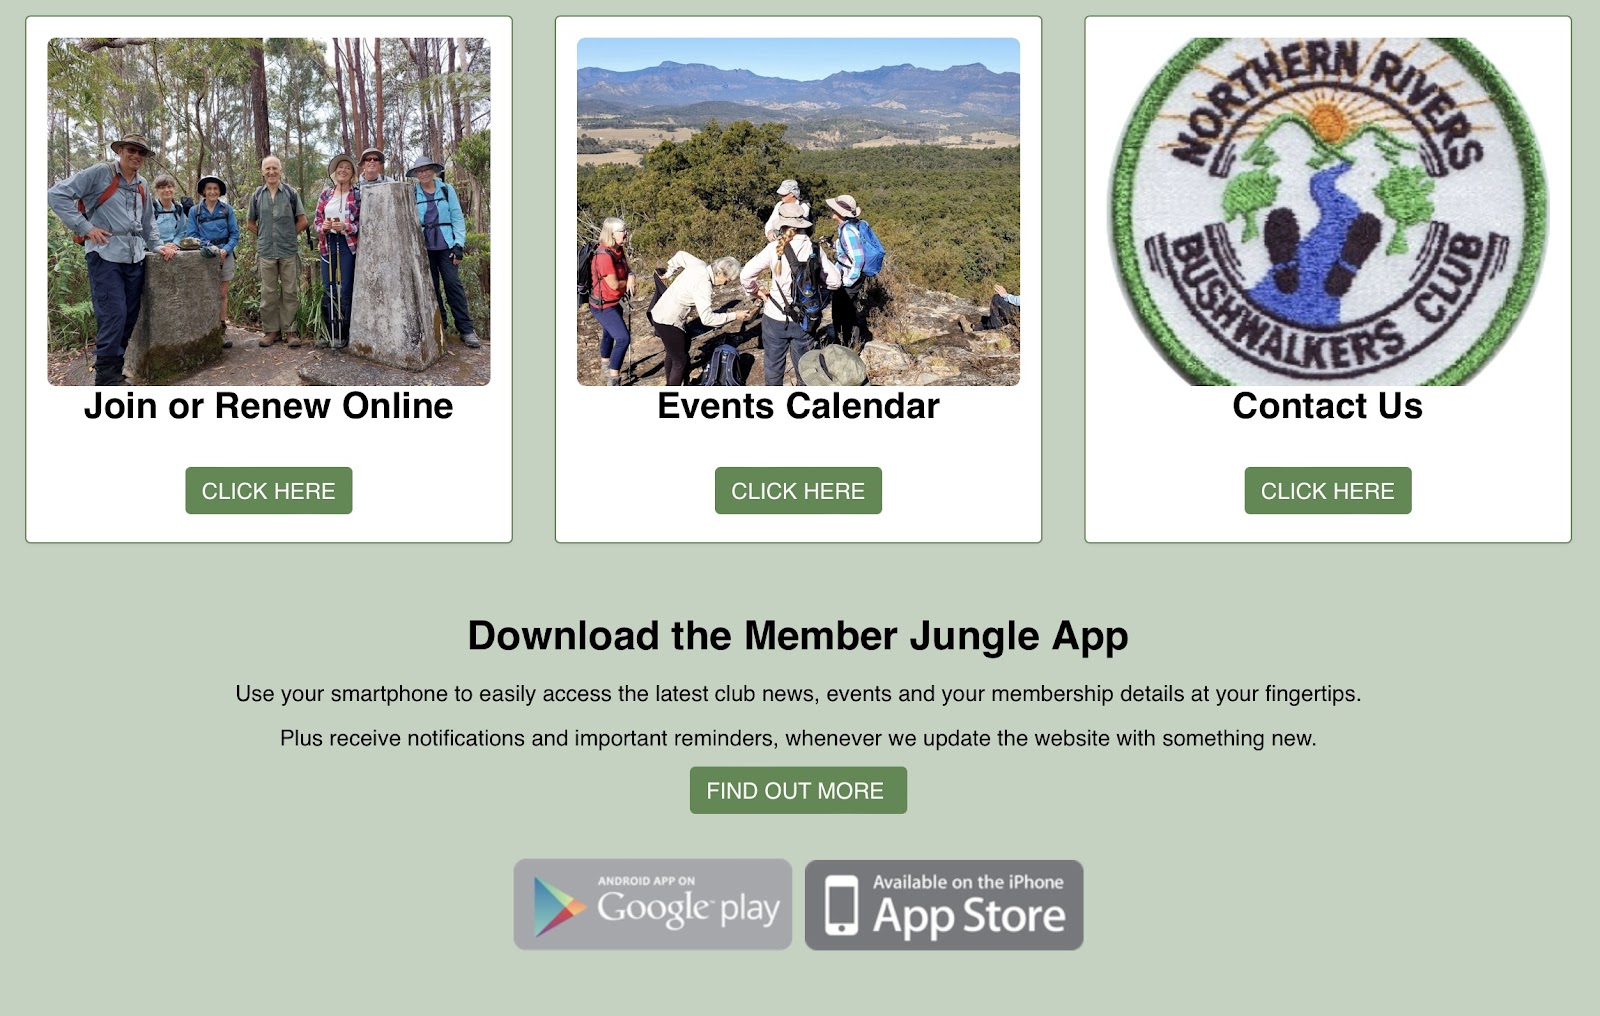 The Member Jungle Mobile App